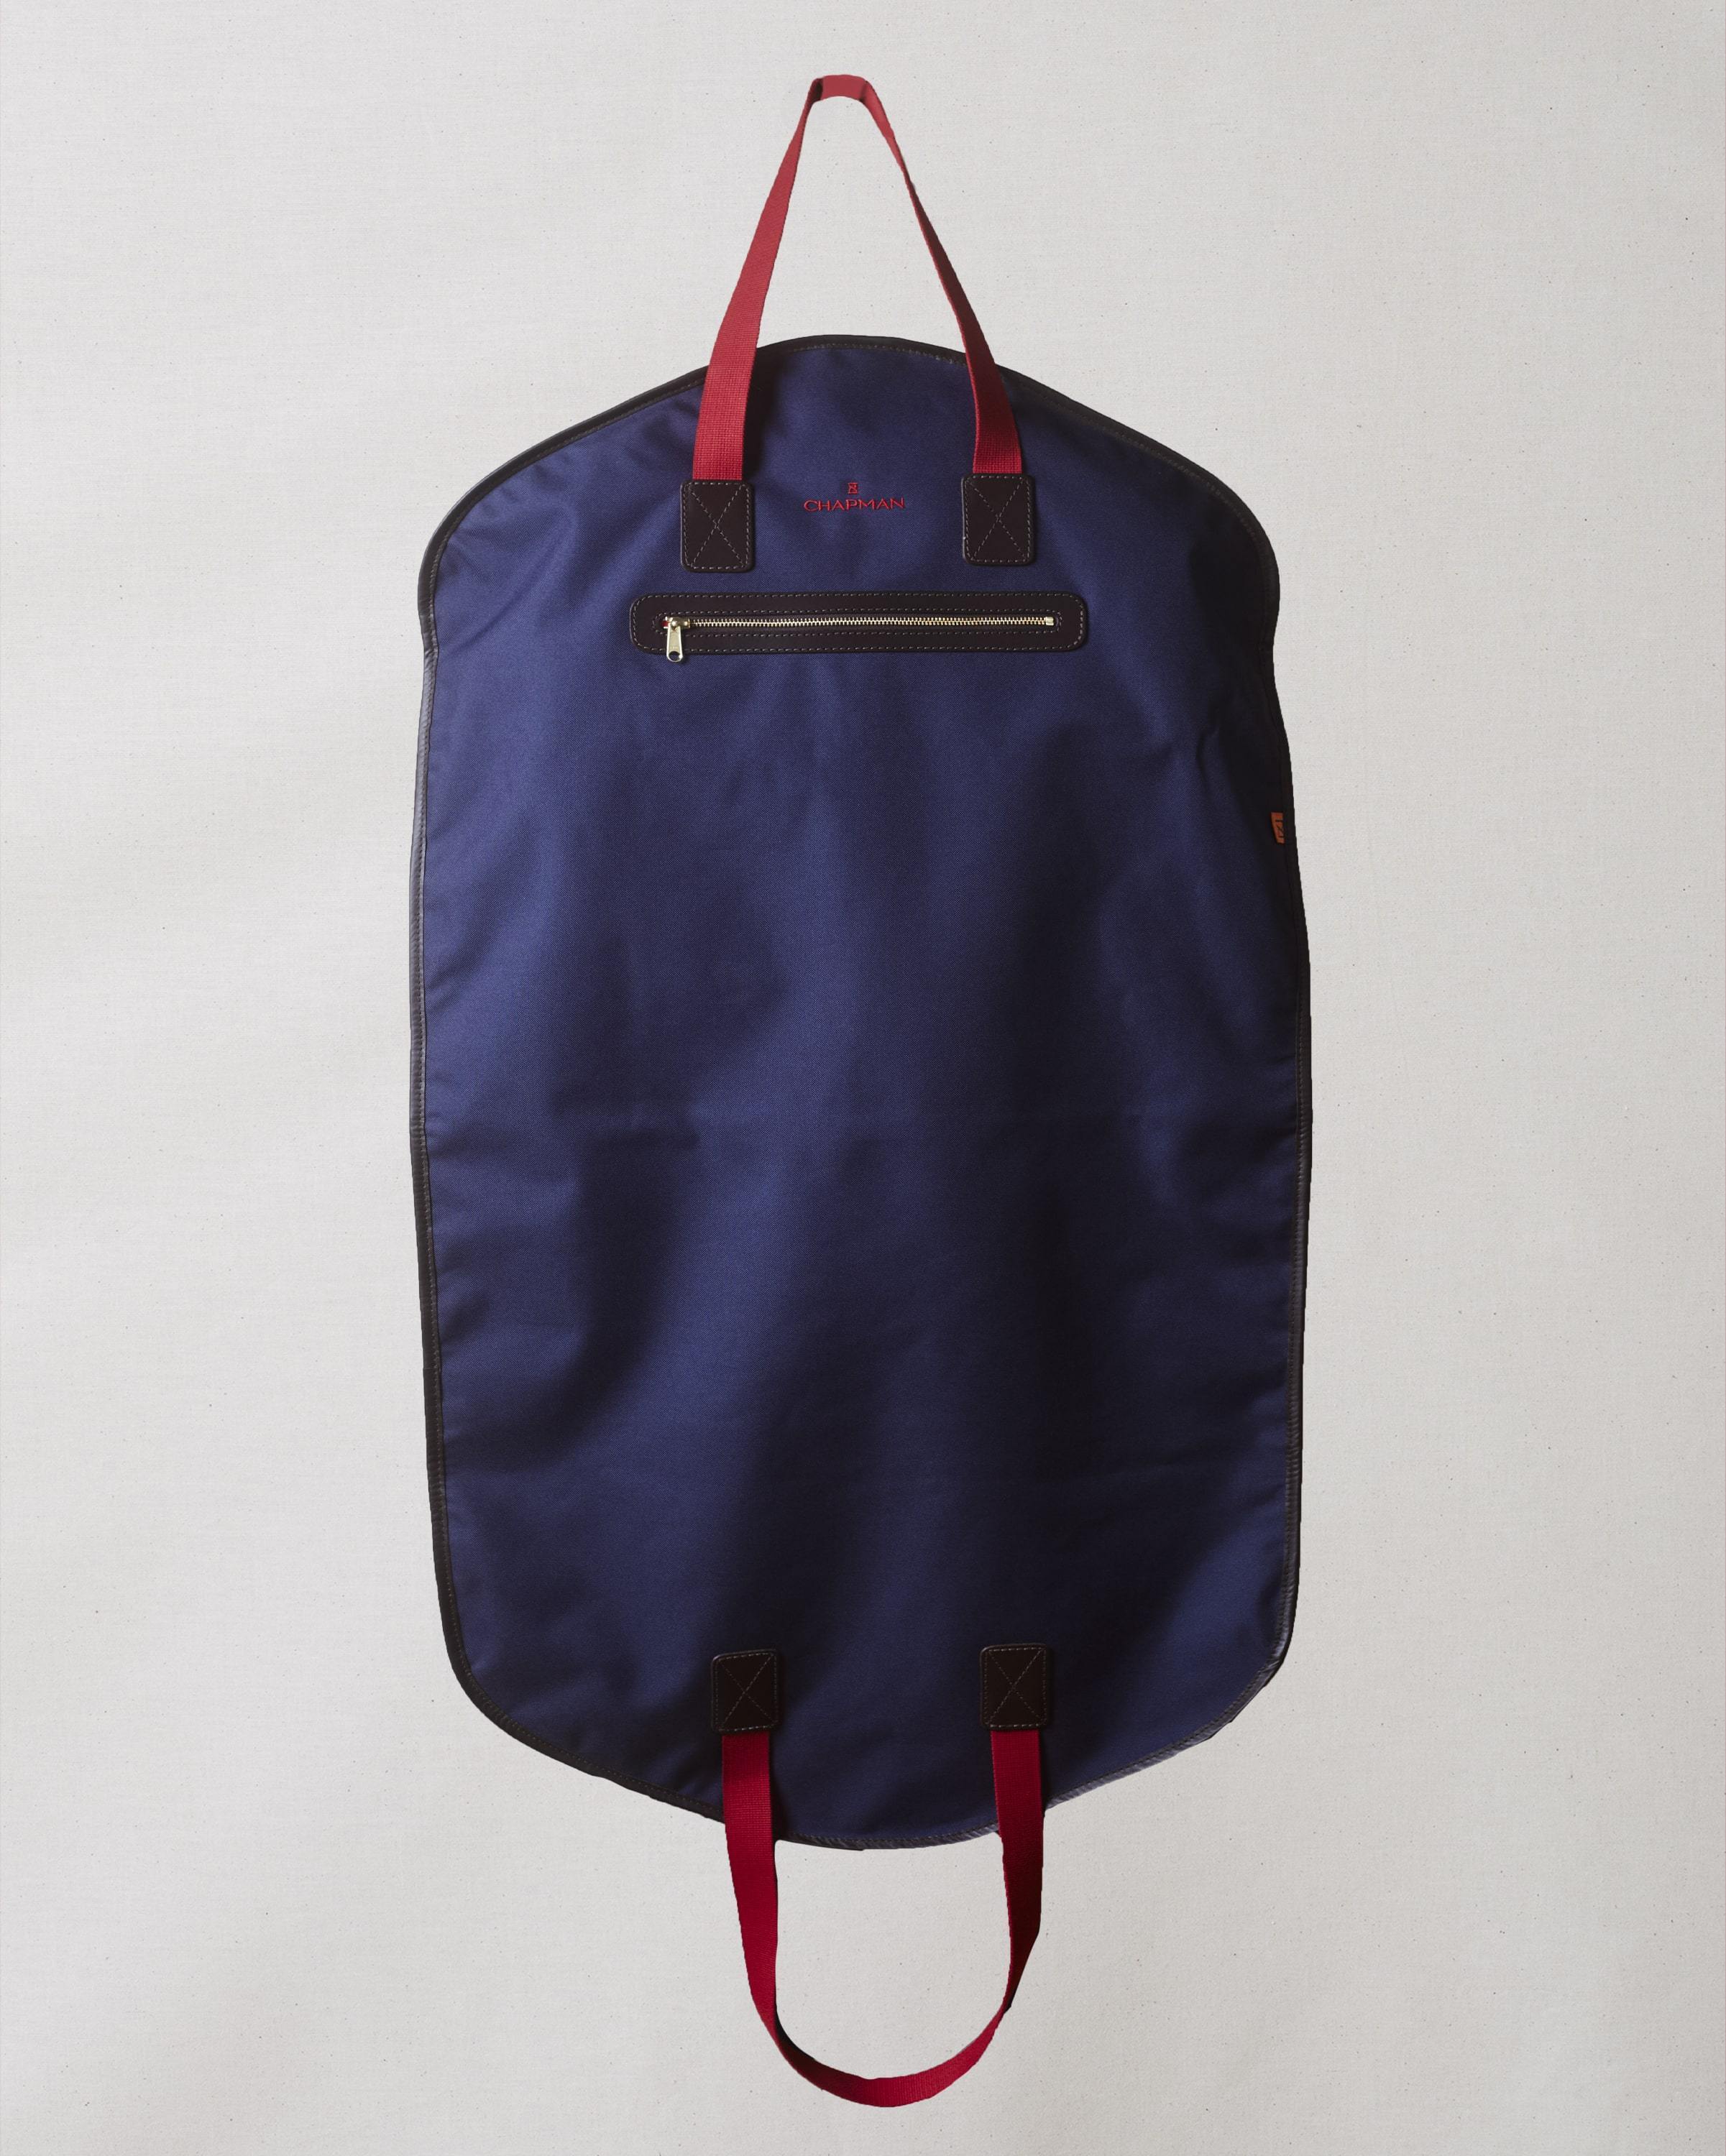 Chapman, Bags, John Chapman Brown Canvas Mayfly Satchel W Adjustable  Leather Strap